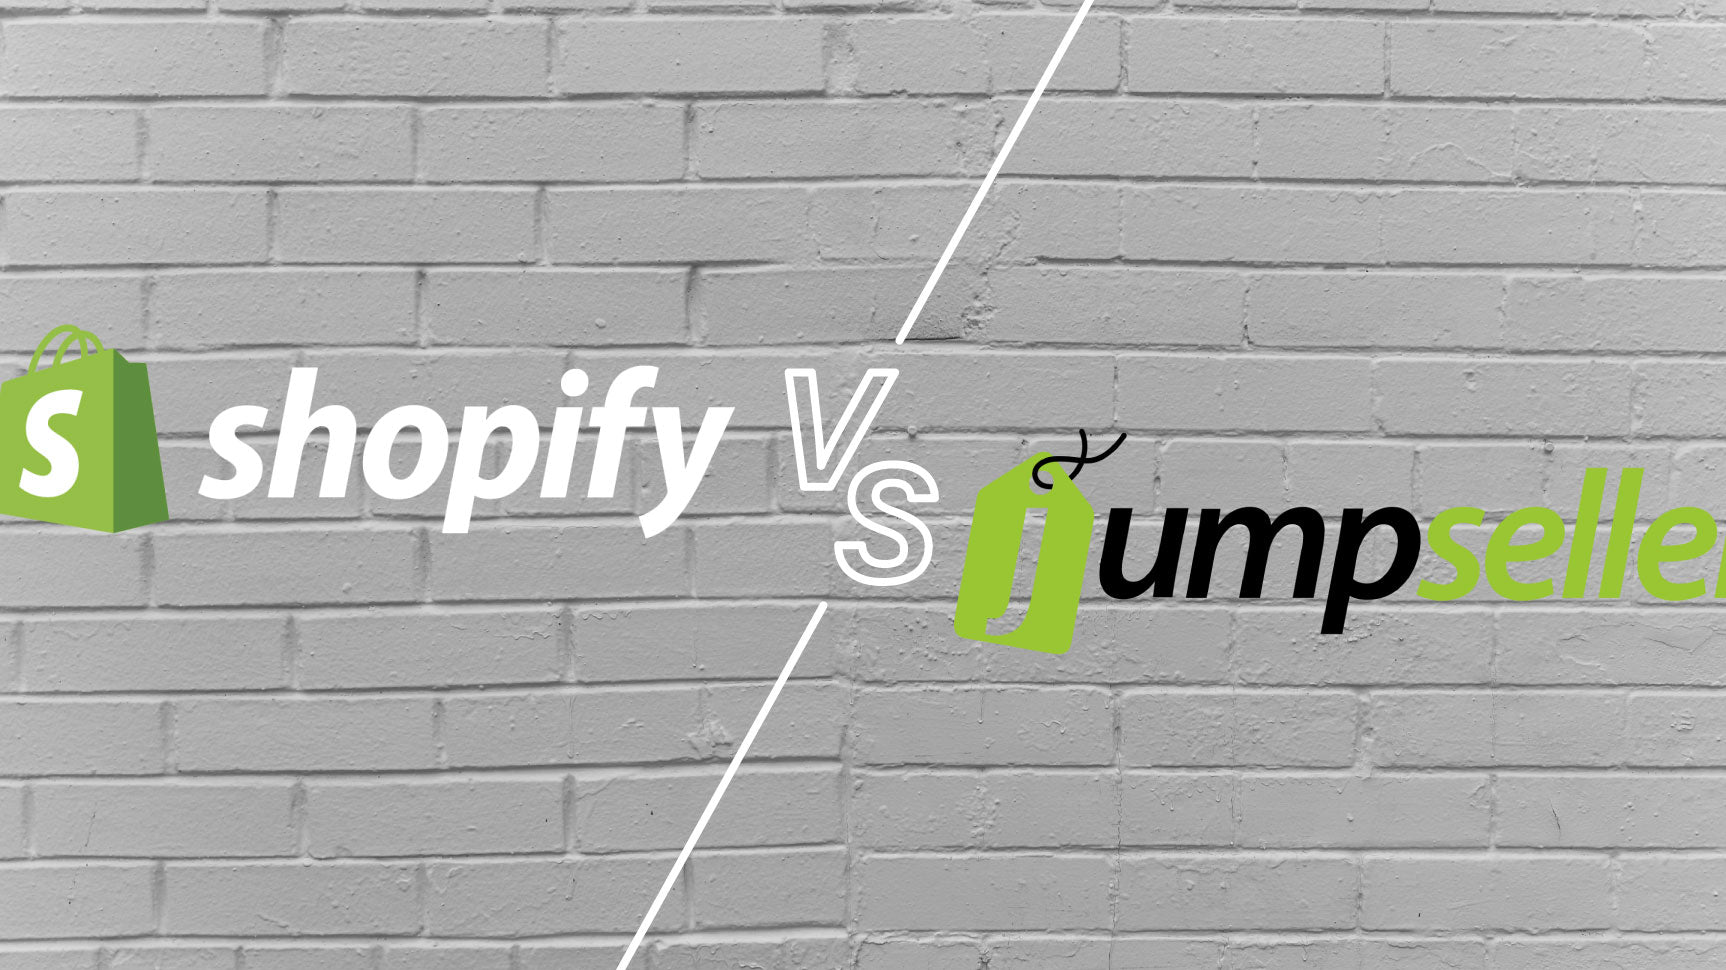 Shopify v/s Jumpseller